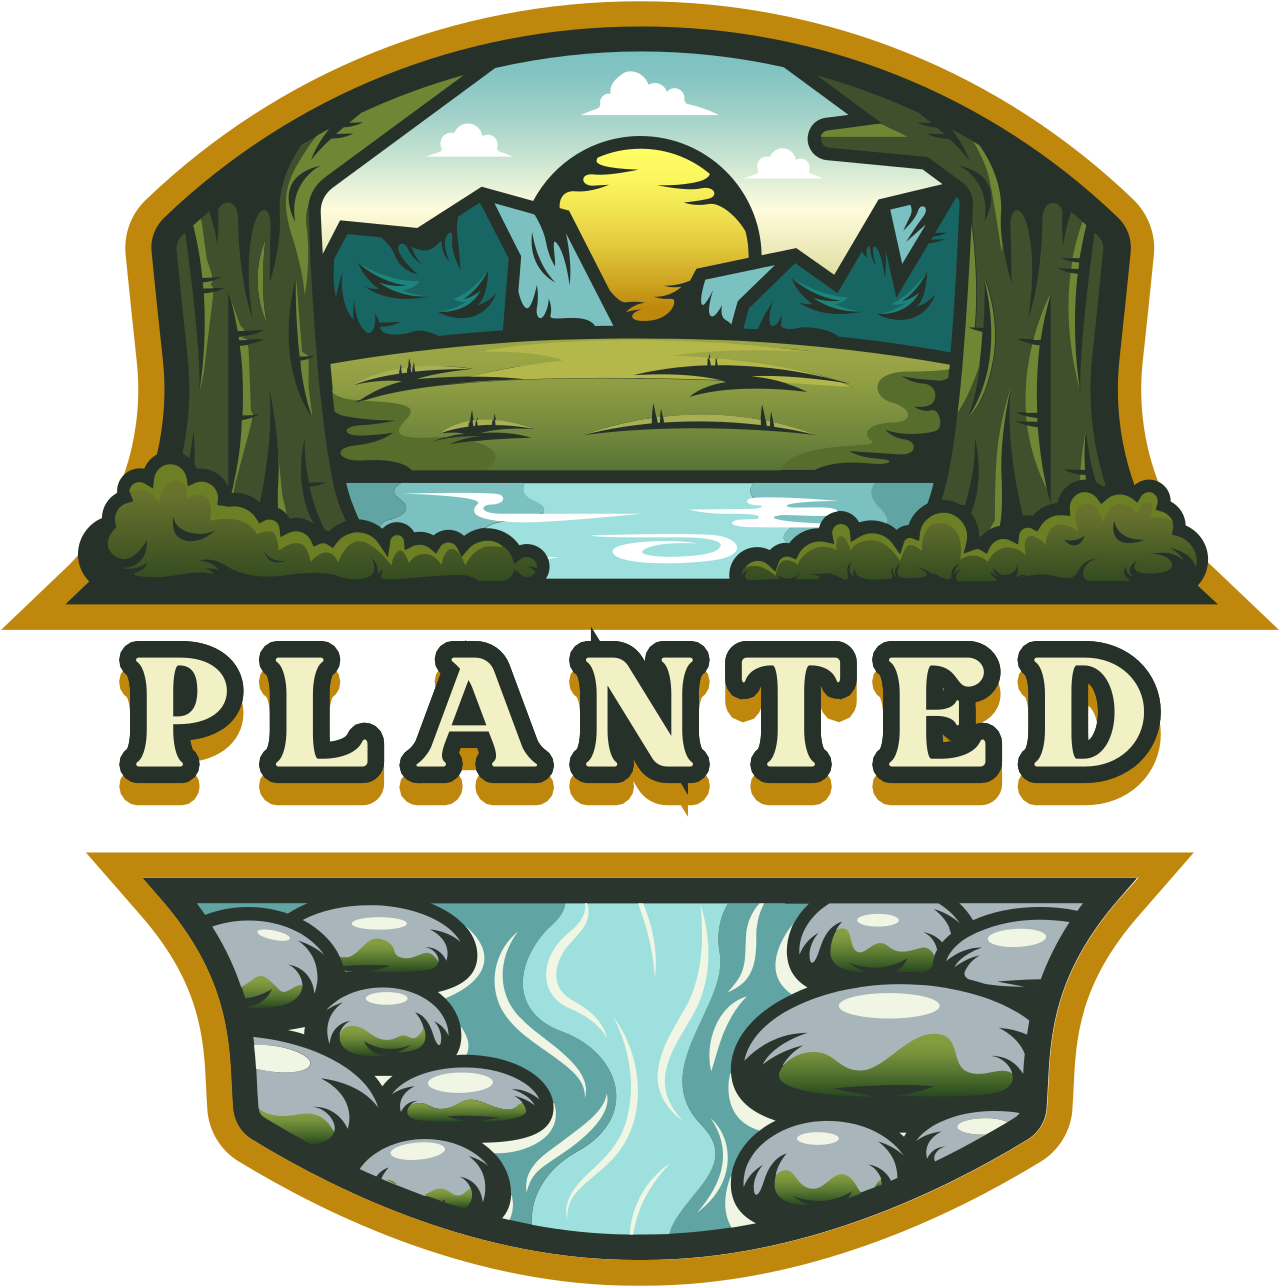 Planted's logo